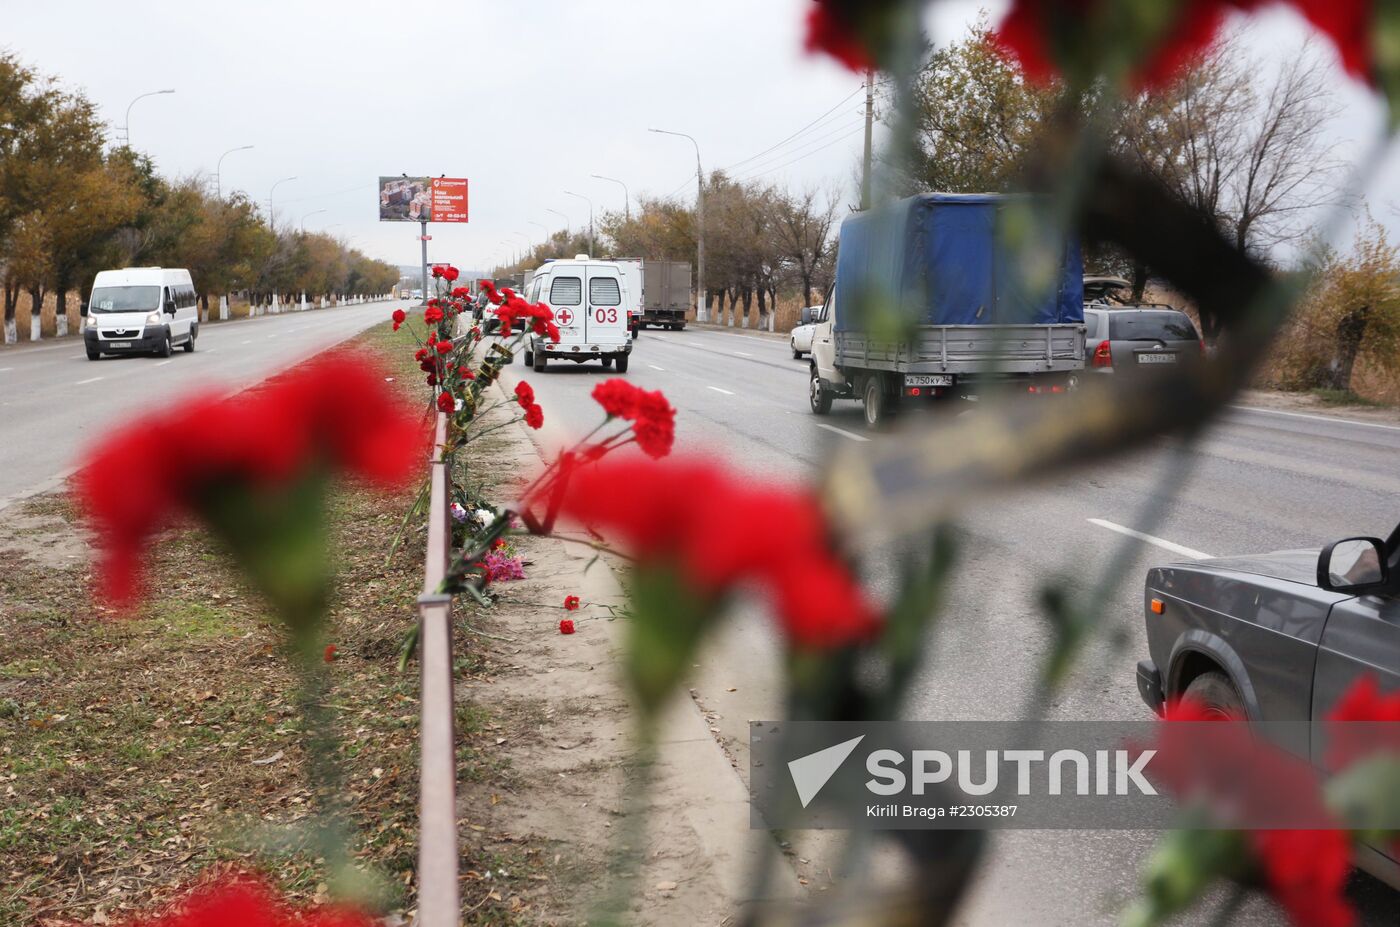 Mourning for victims of terrorist attack in Volgograd